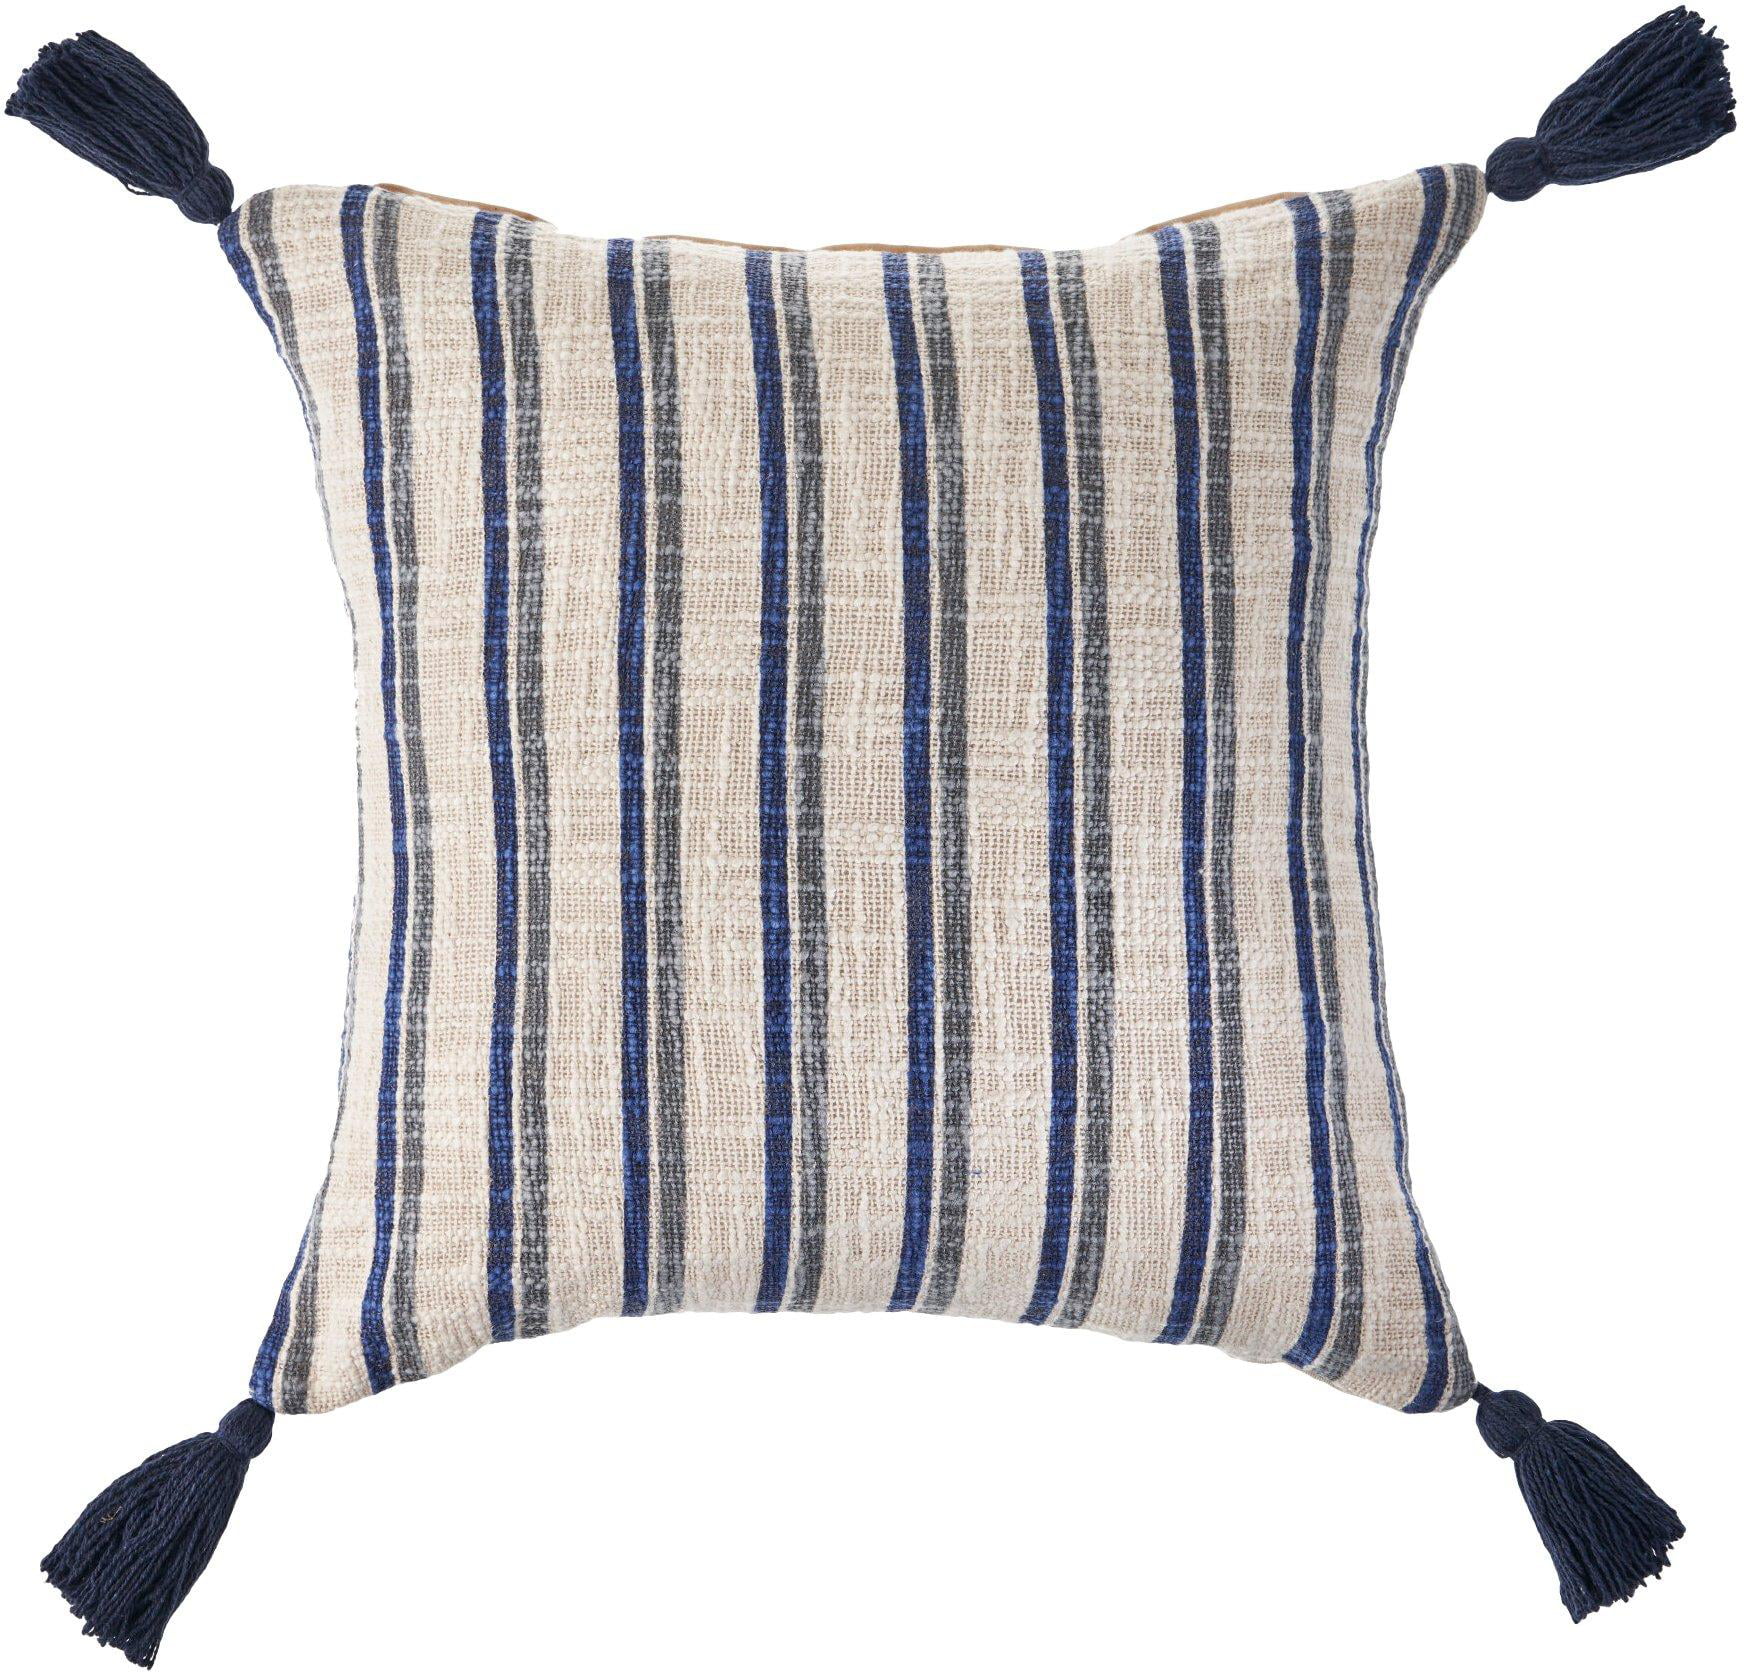 LR Home Tassel Throw Pillow Gray/Natural 18 x 18